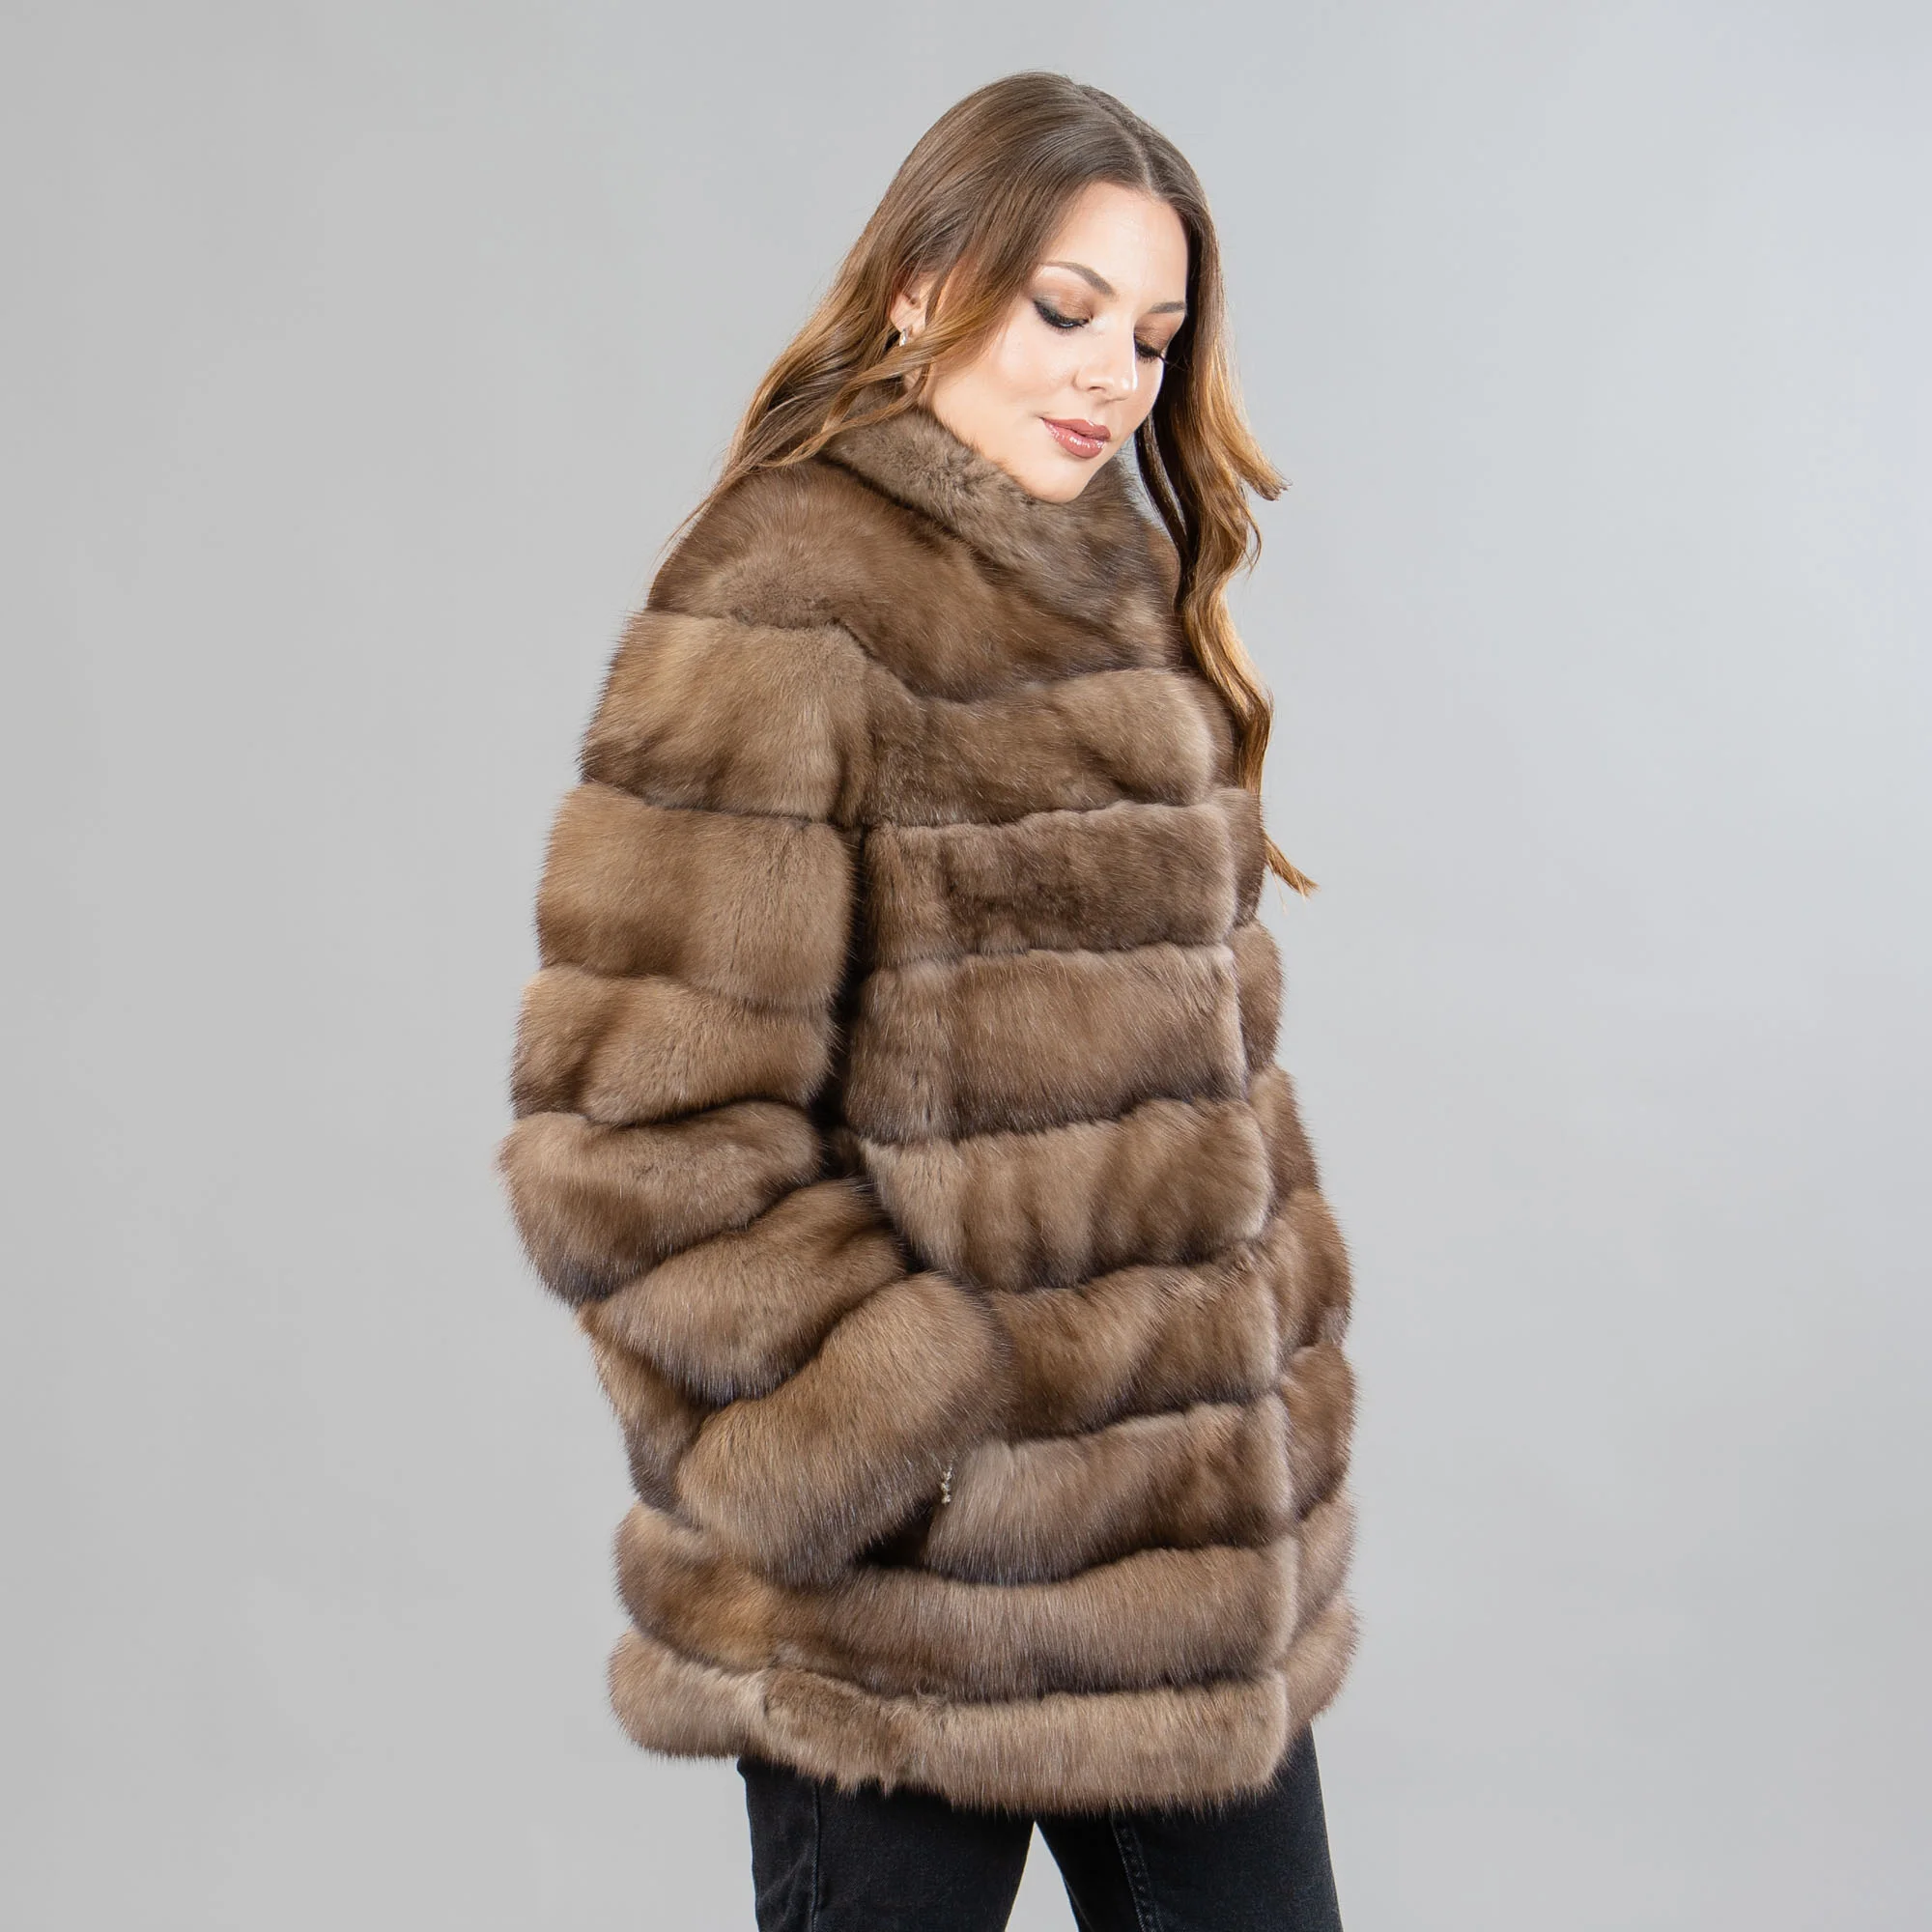 Sable fur coat in brown color